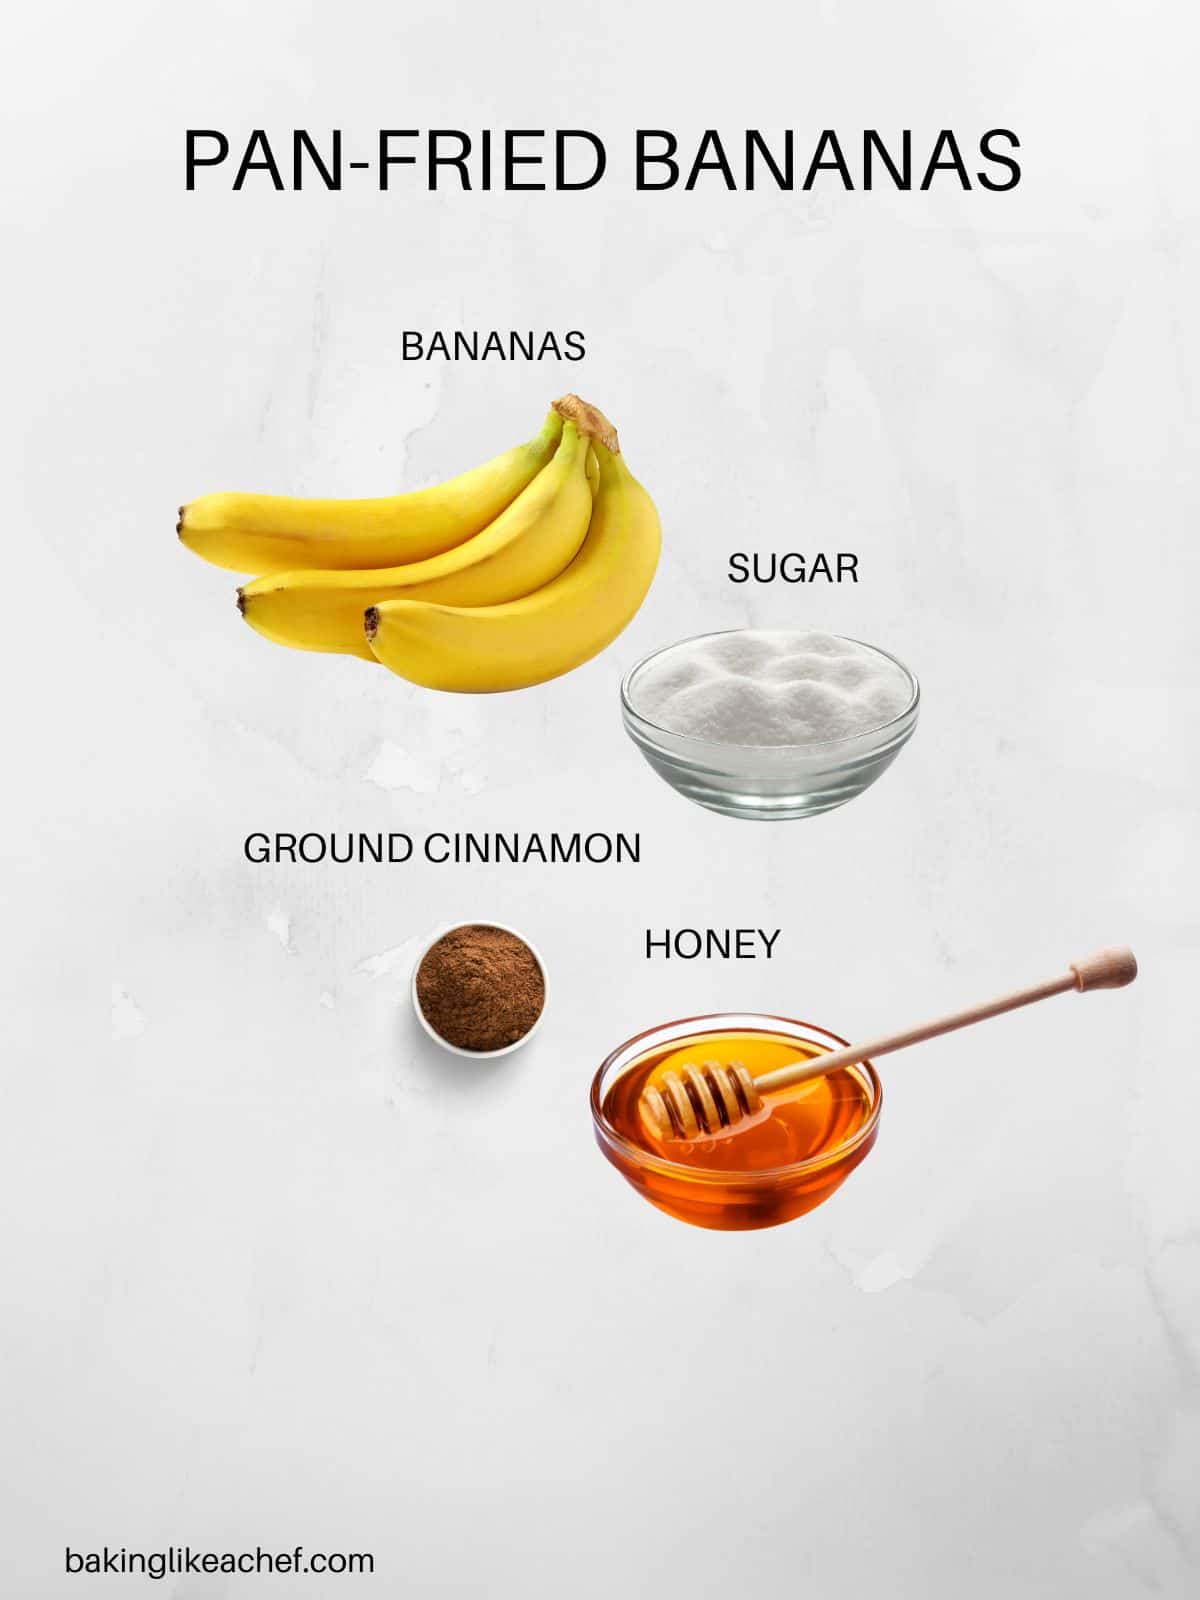 Pan-fried bananas ingredients in pictures